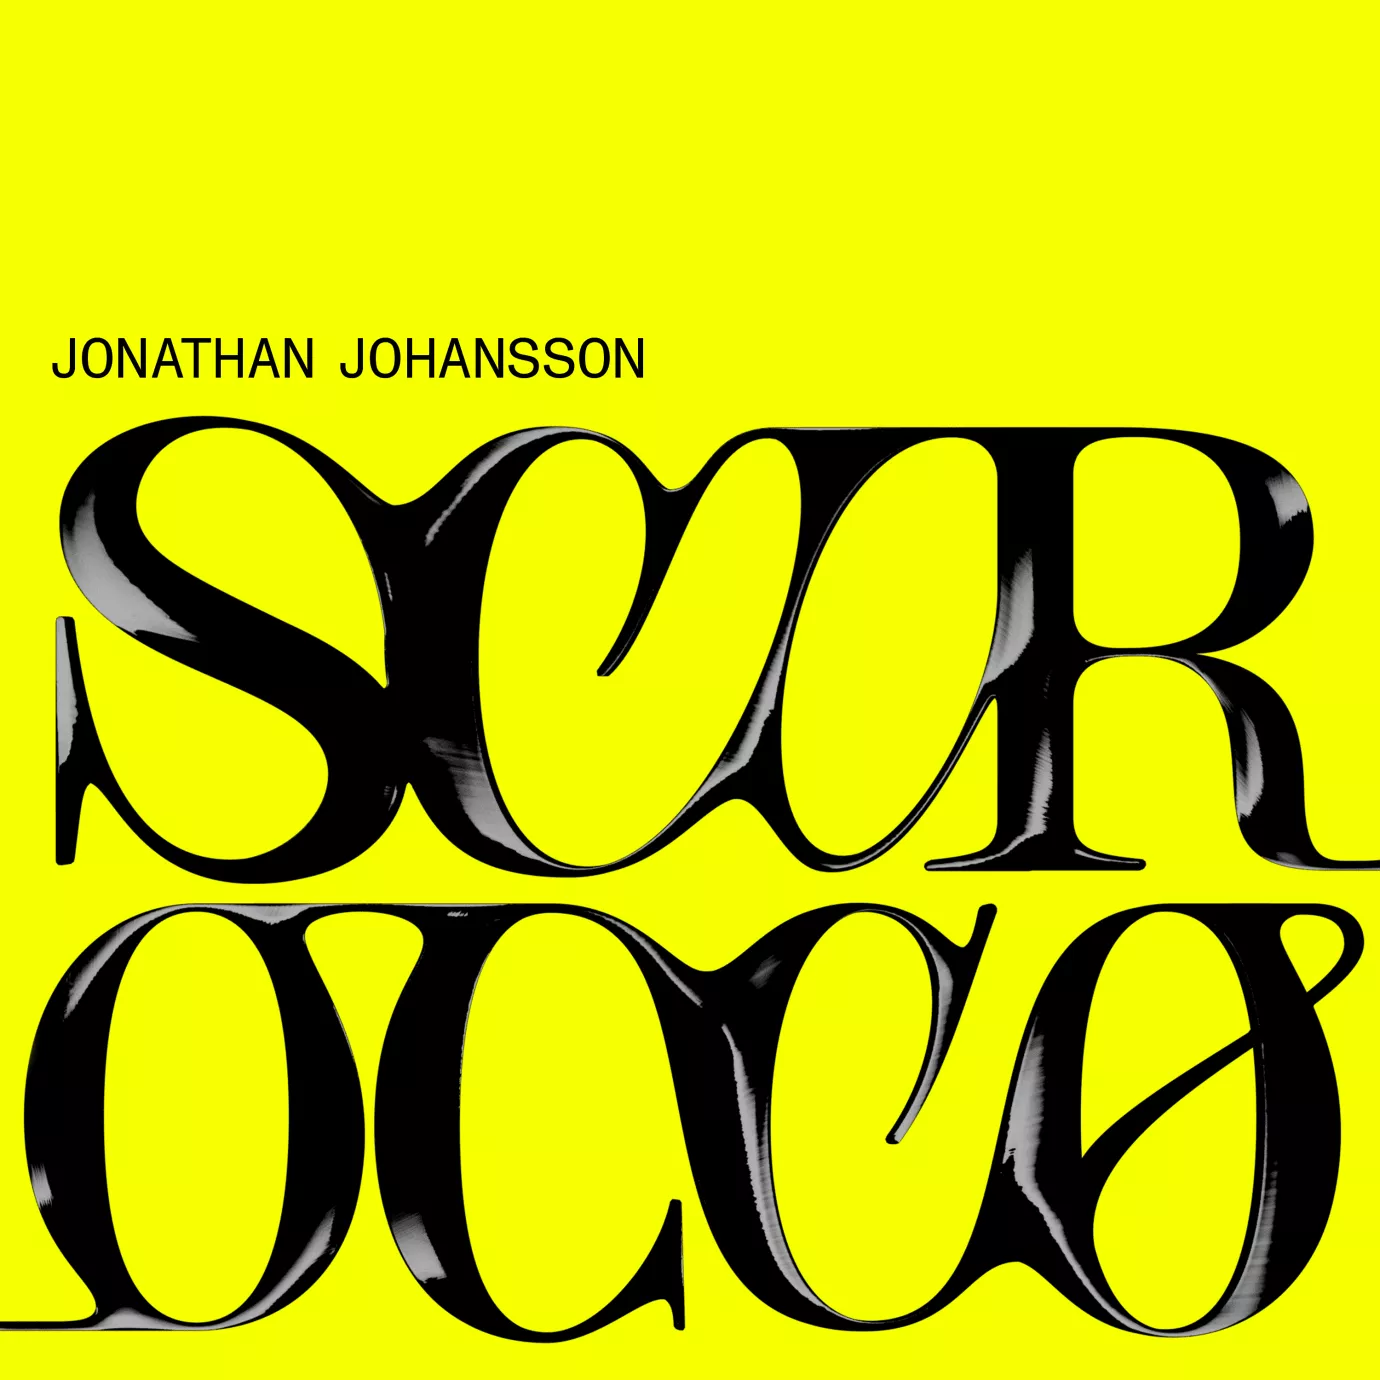 Scirocco - Jonathan Johansson 